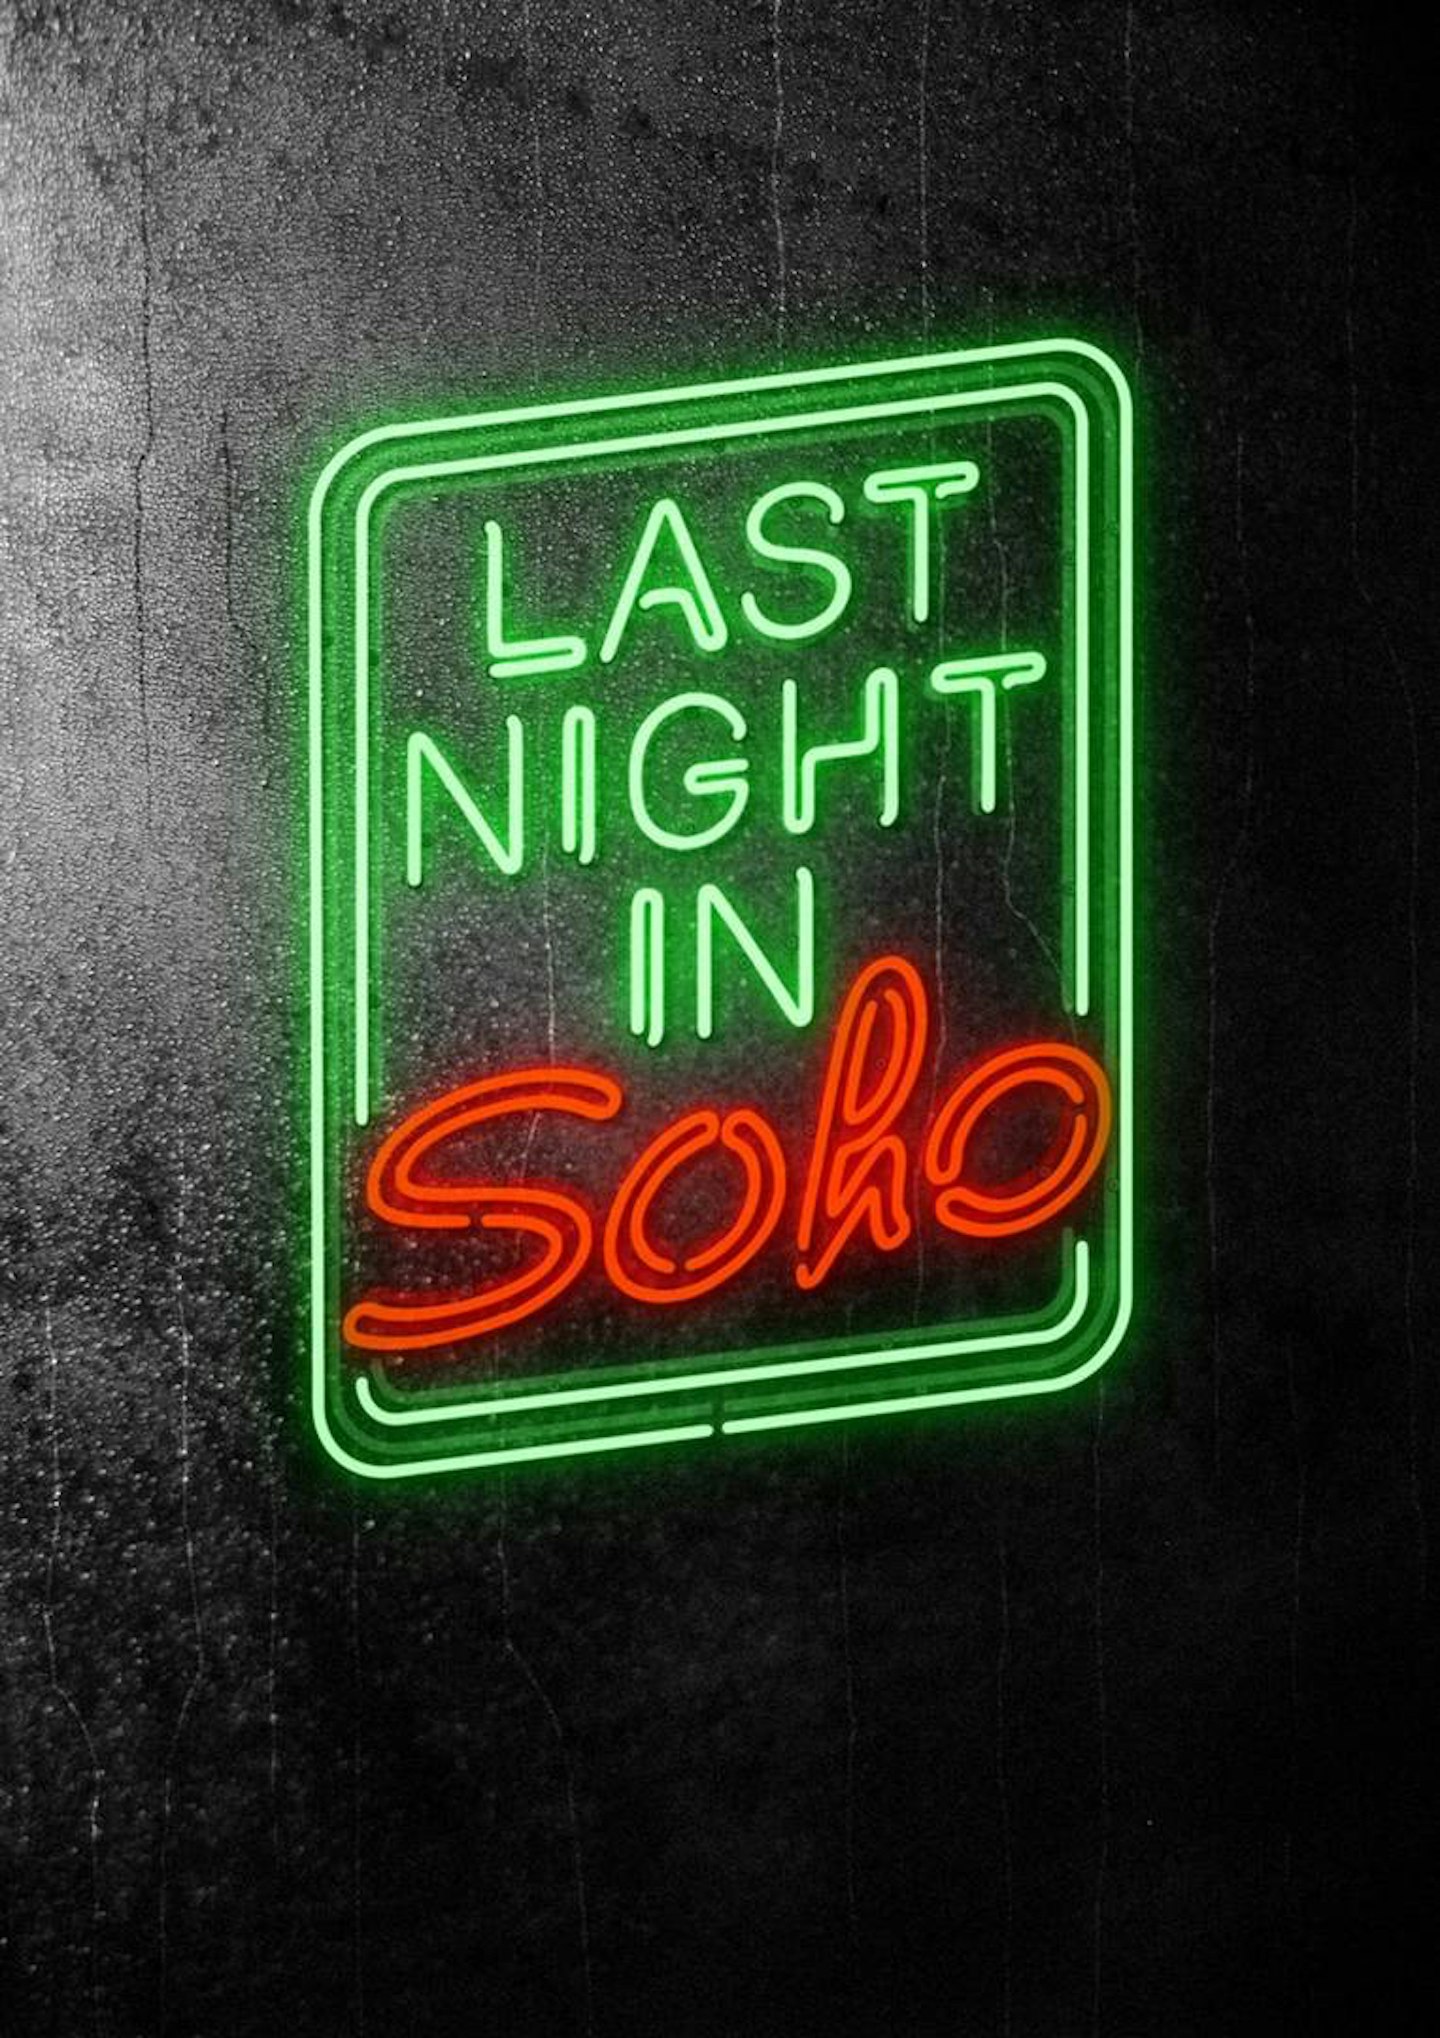 Last Night In Soho poster